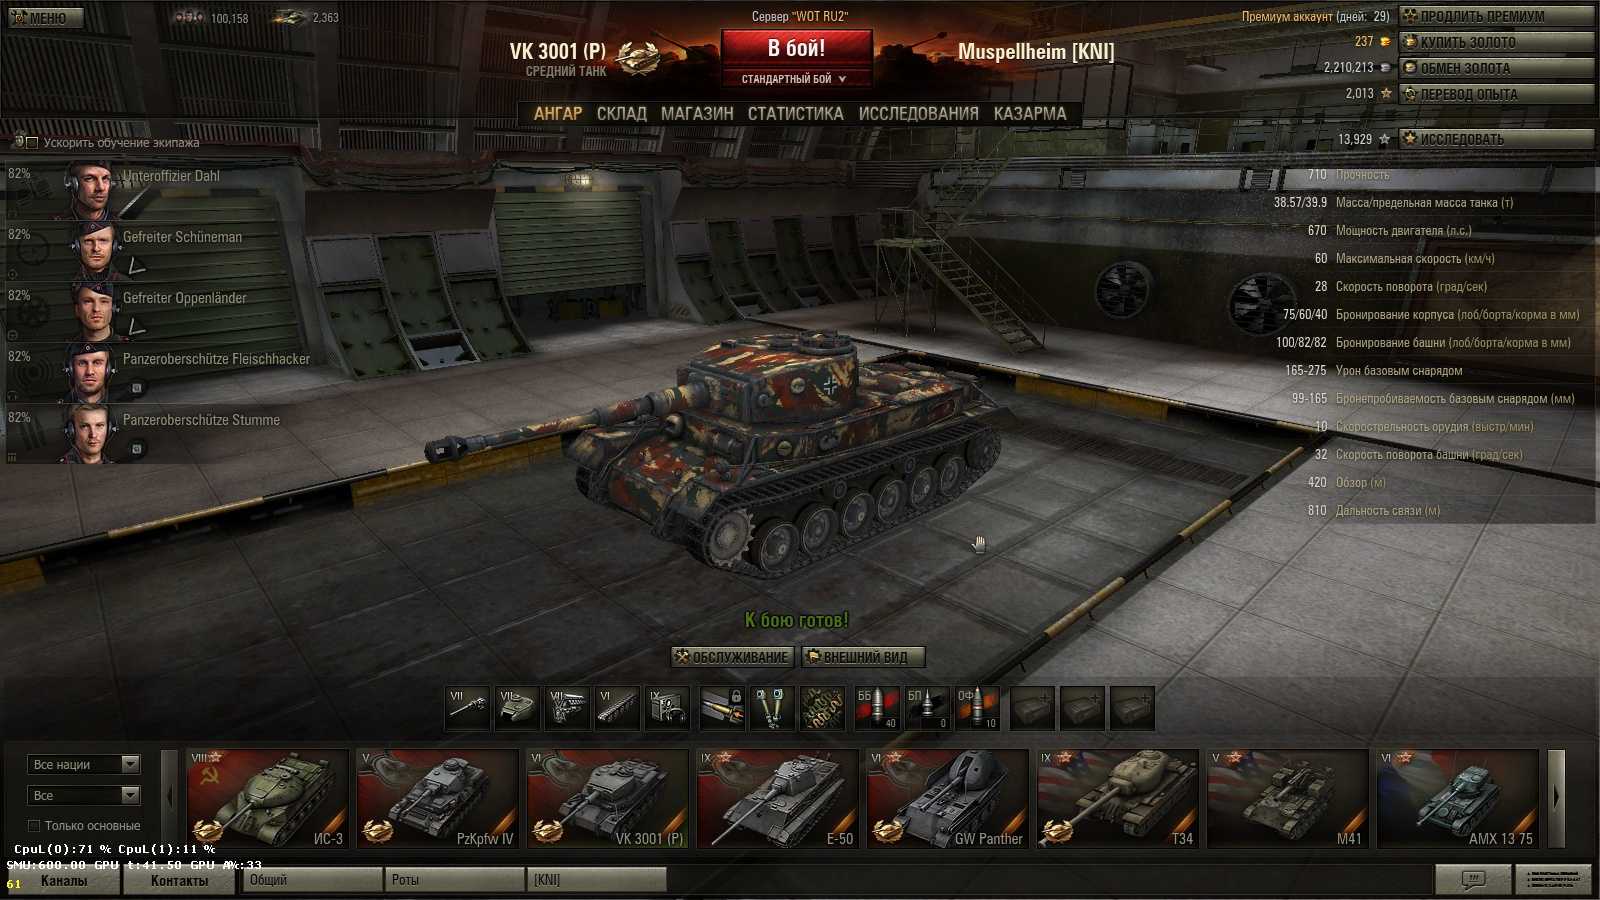 Tank 670. Ворлд оф танк ангар. Самый быстрый танк в World of Tanks. Названия танков в игре. Маленький и быстрый танк в WOT.